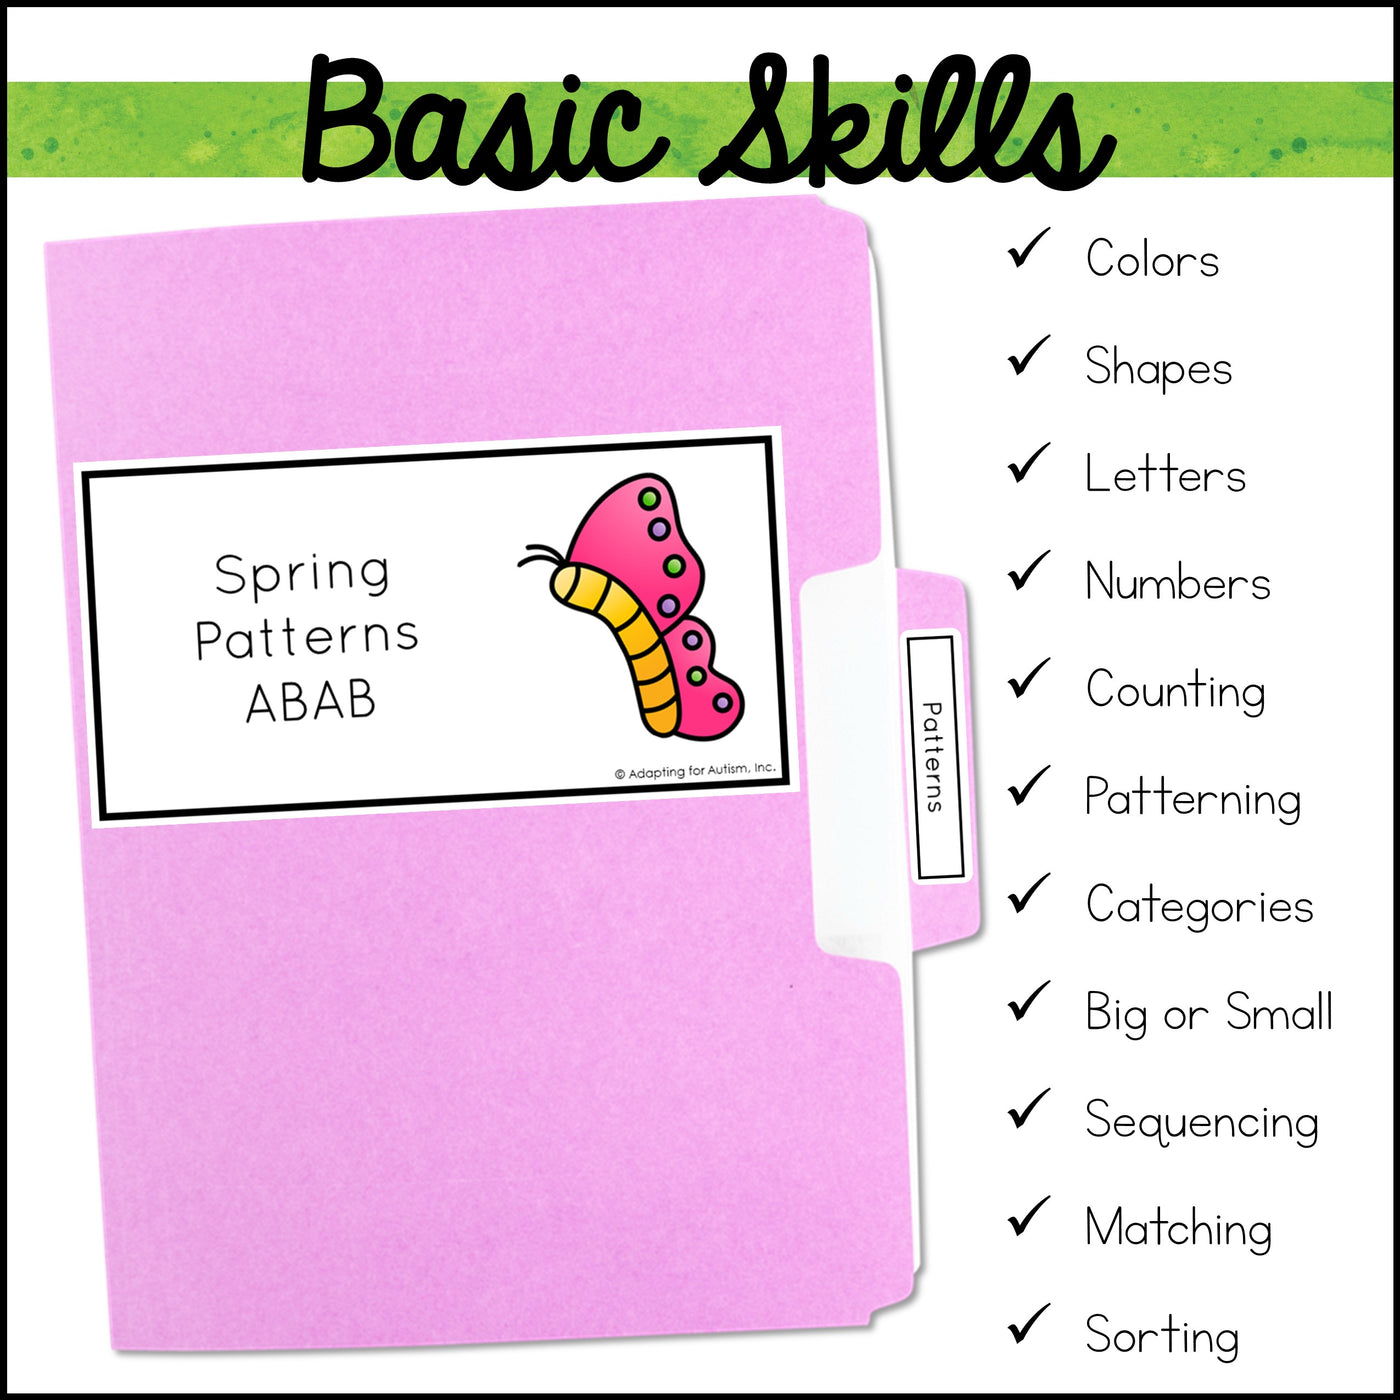 Spring Basics